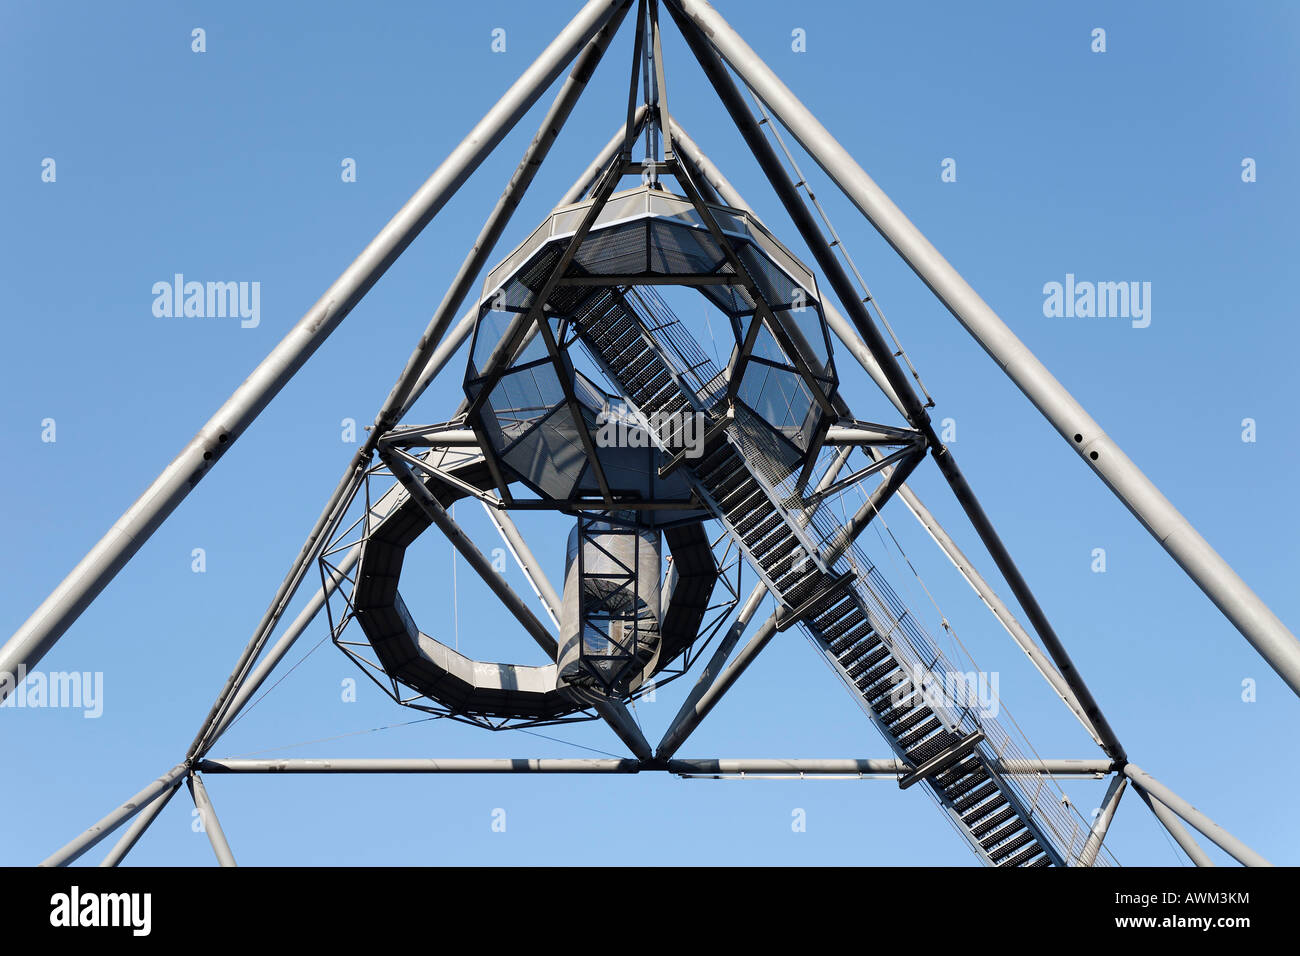 Tetrahedron made of steel pipes, pyramid-shaped observation platform, Prosper II Mine, Bottrop, North Rhine-Westphalia, Germany Stock Photo